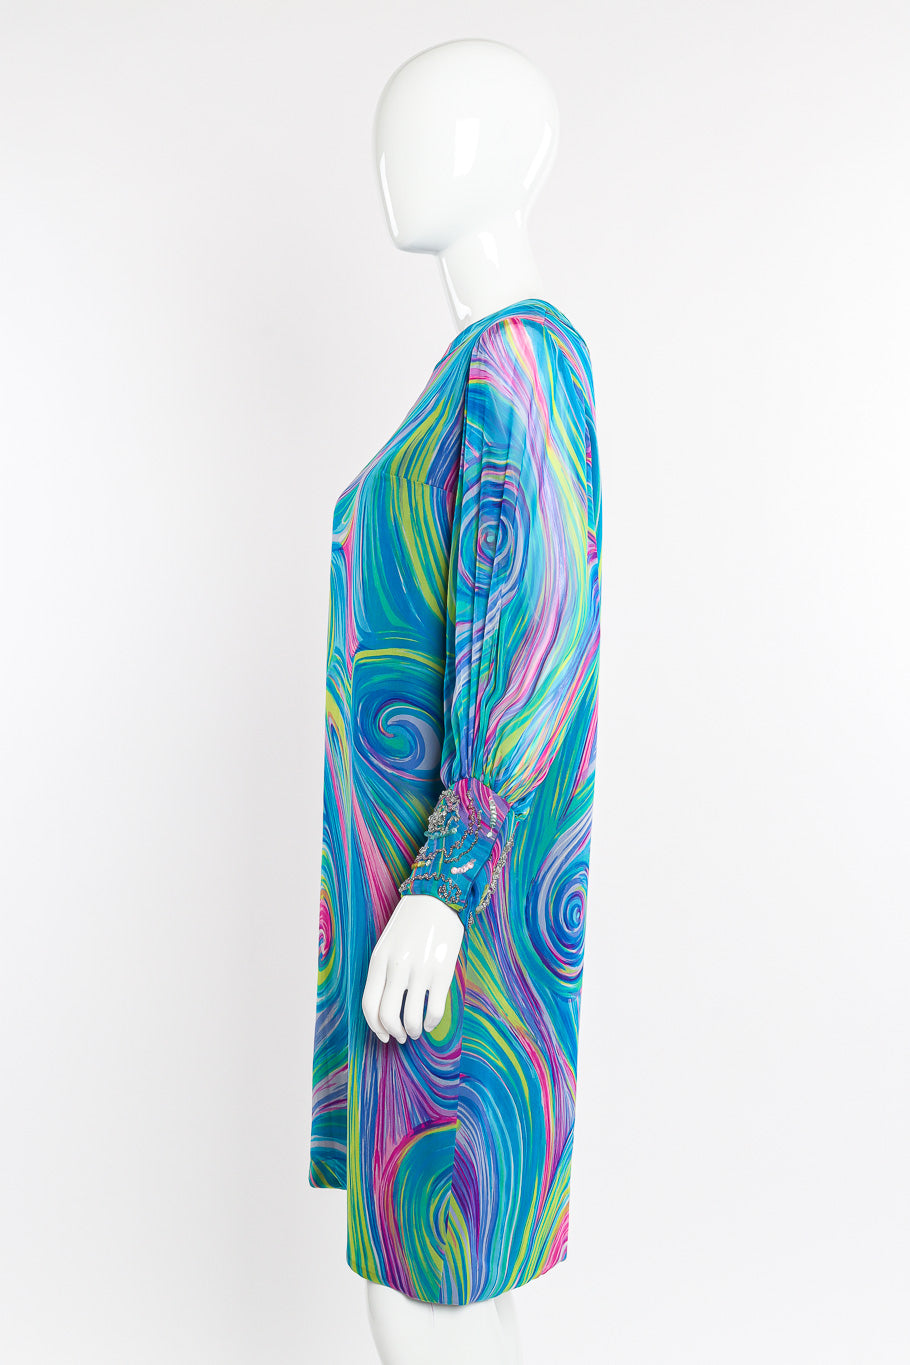 Vintage Mr. Frank Abstract Swirl Silk Dress side view on mannequin @Recessla